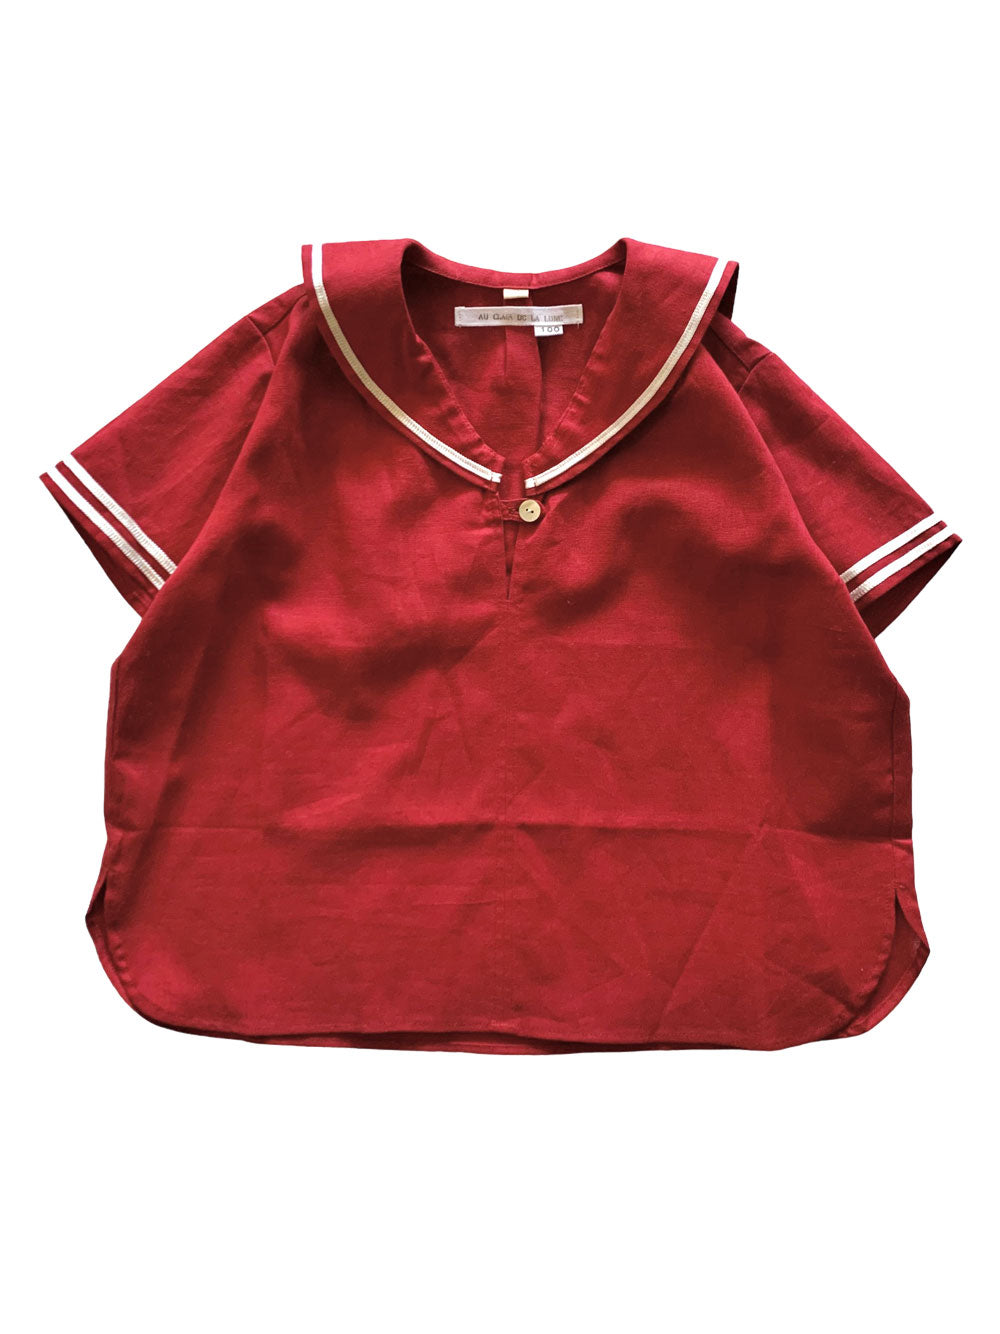 PREORDER: Bordeaux Sailor Shirt